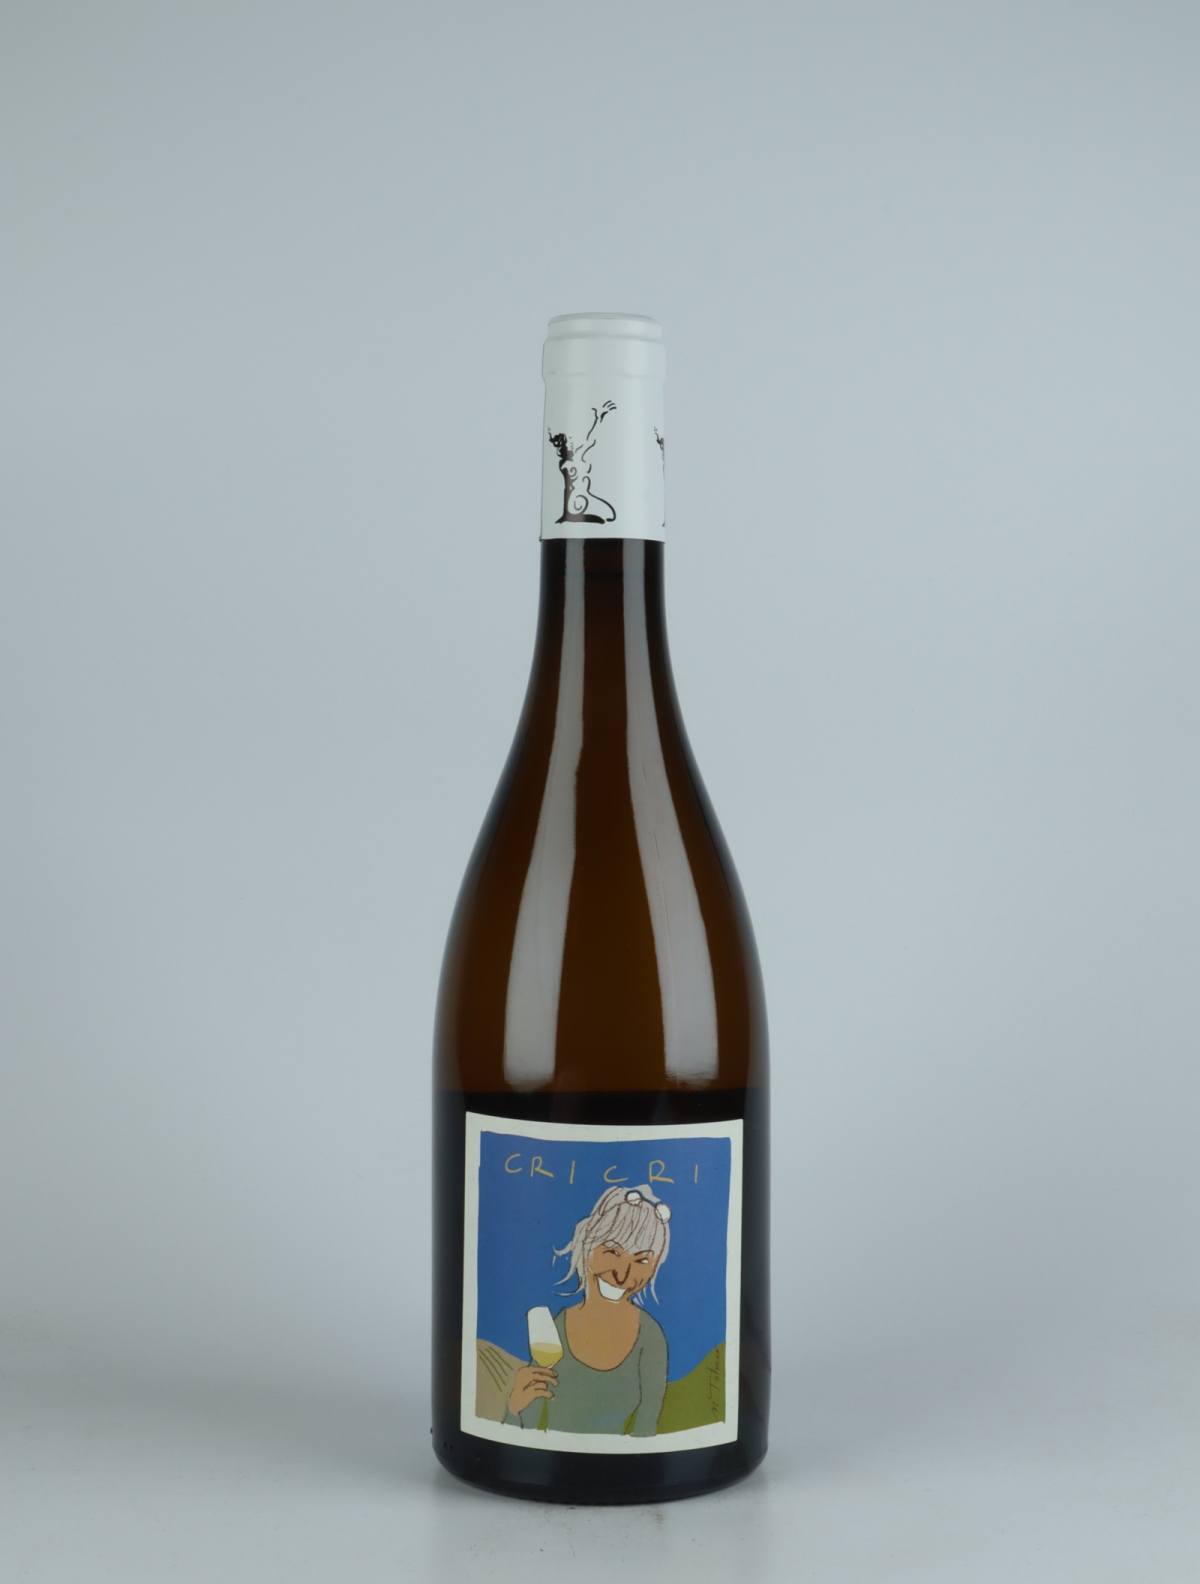 A bottle 2021 Cricri White wine from Gilles Berlioz, Savoie in France